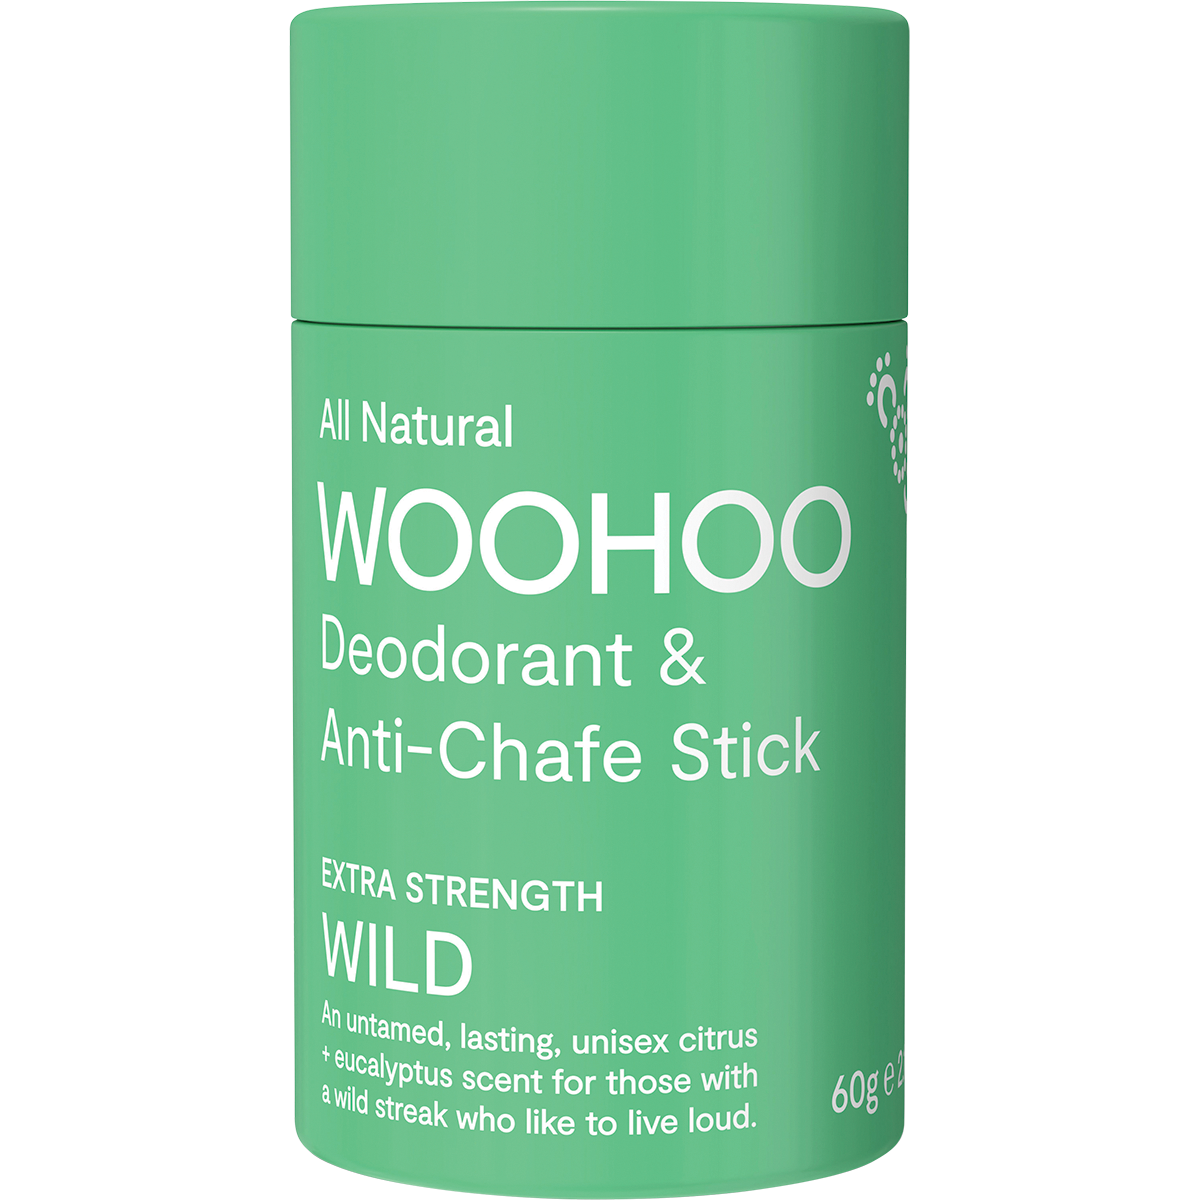 Woohoo Natural Deodorant & Anti-Chafe Stick Wild (Ultra Strength Unisex) 60g